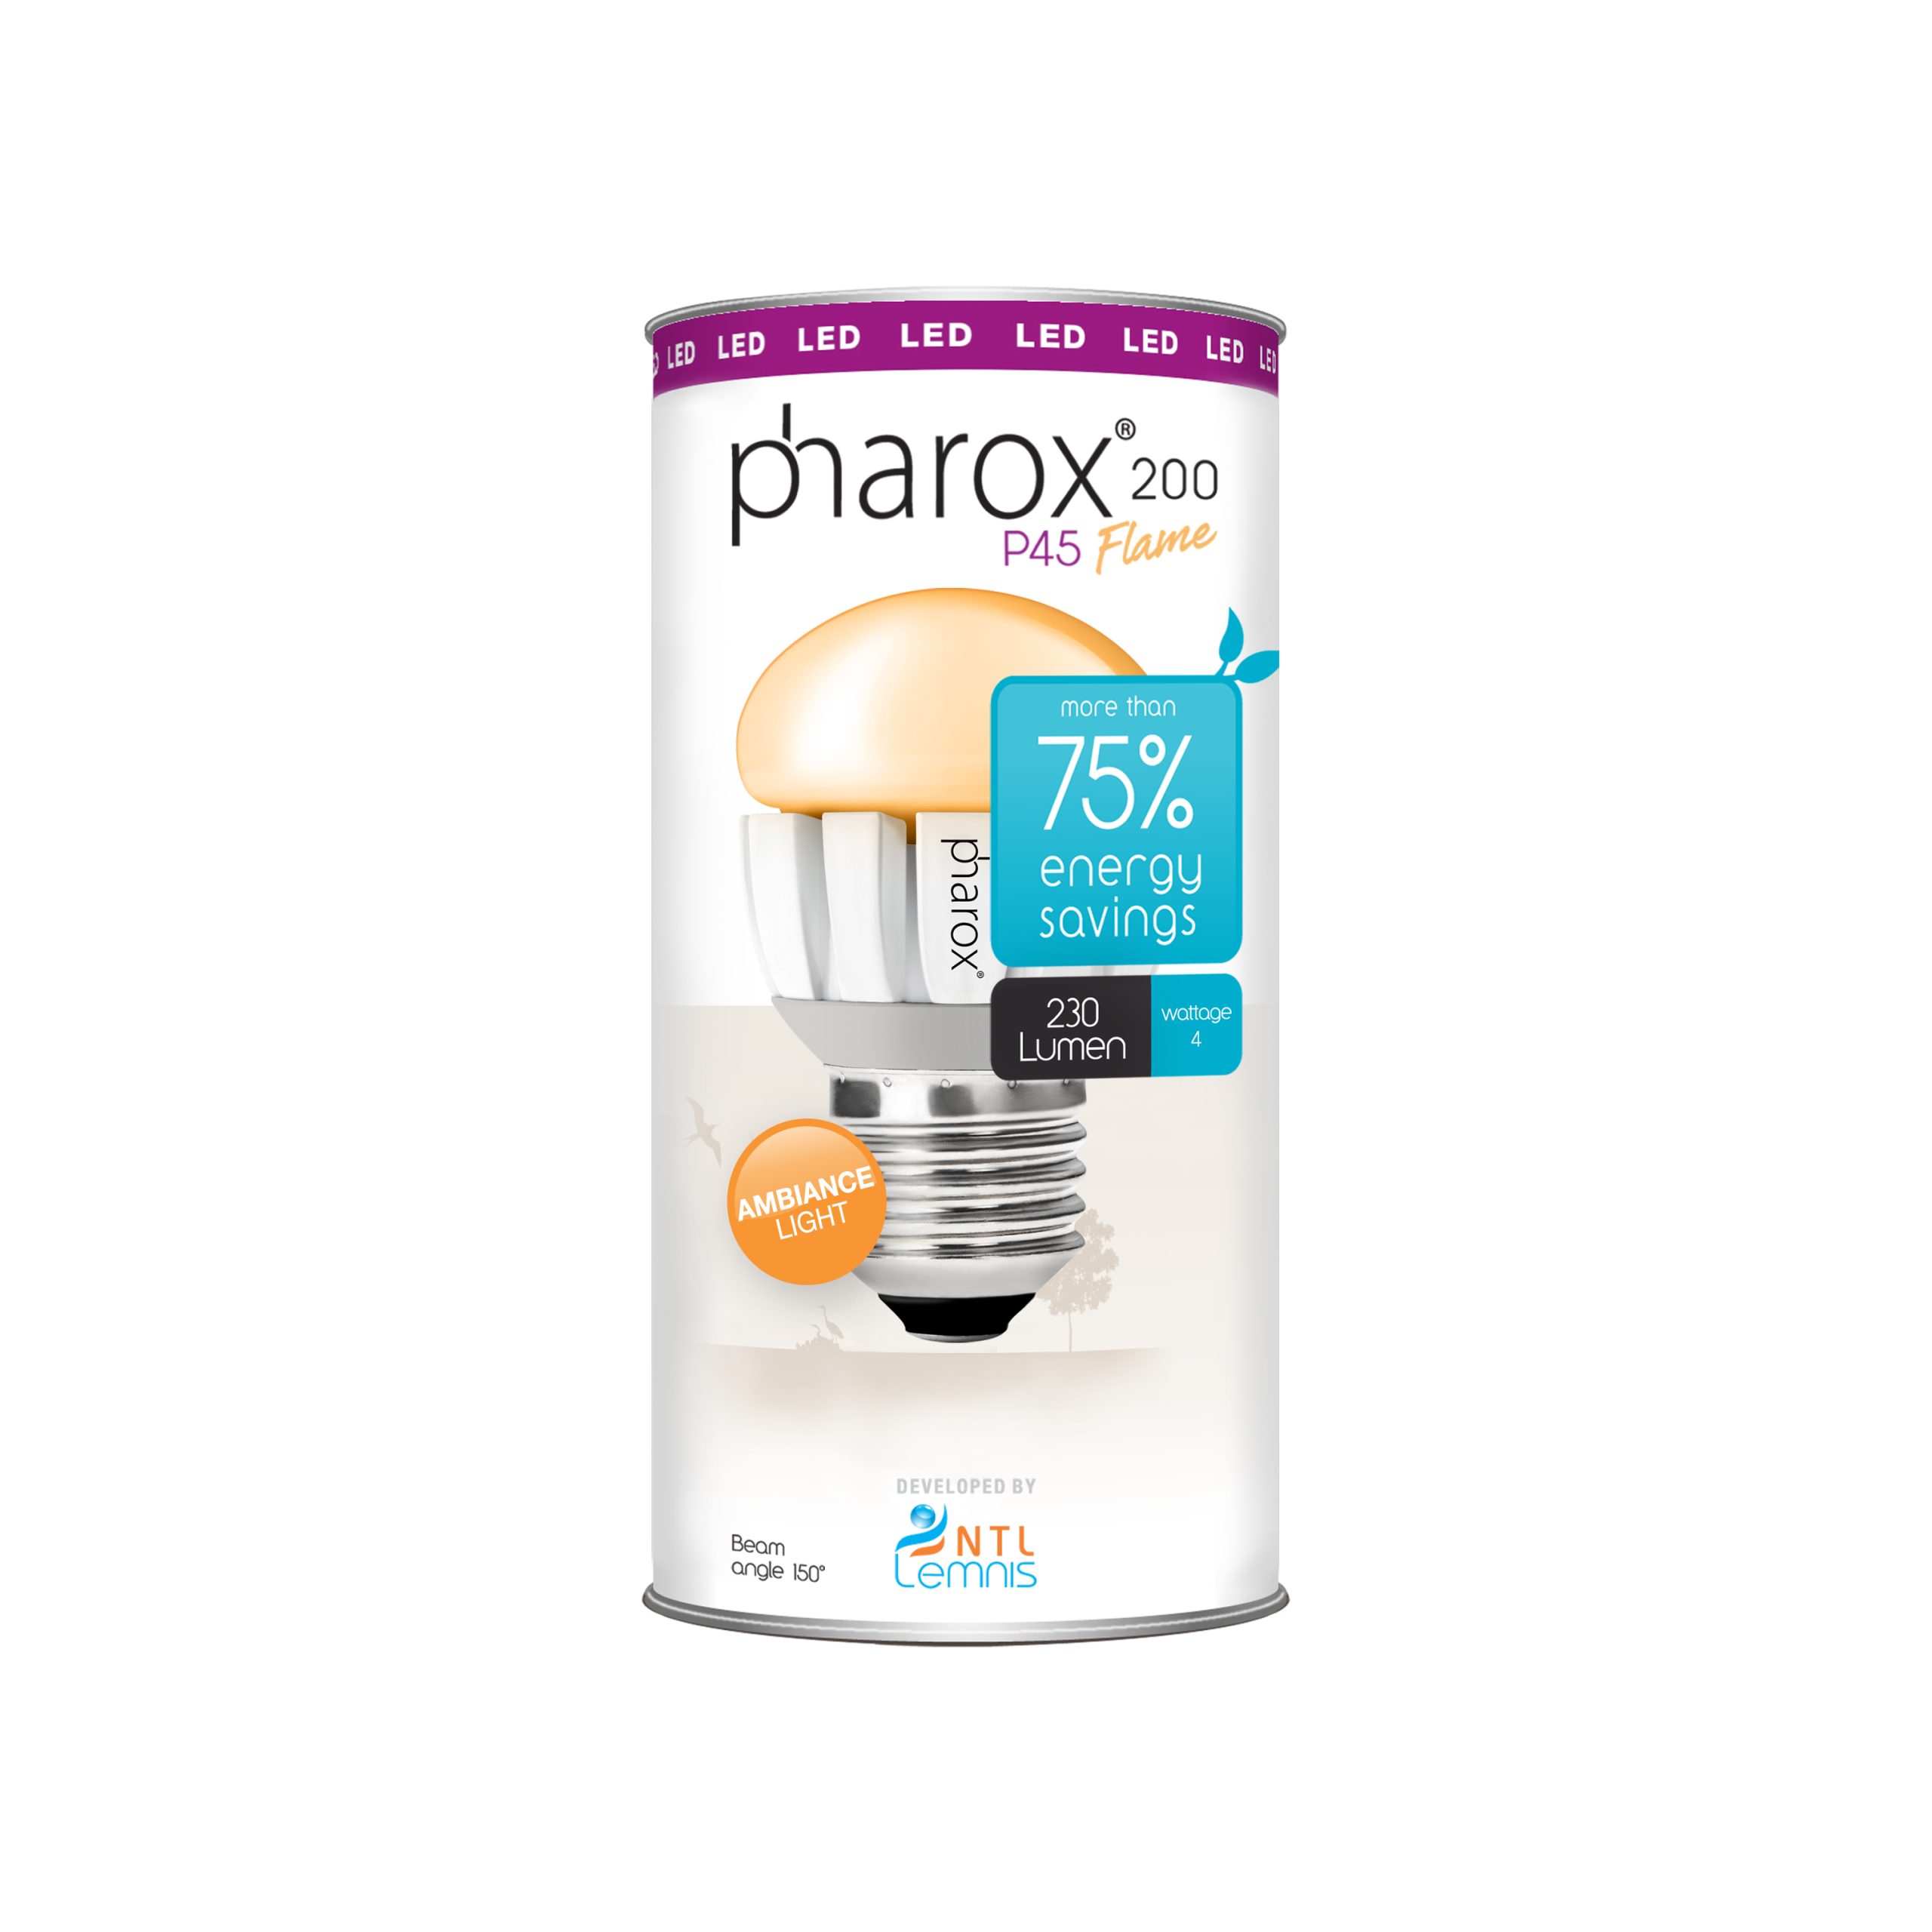 LED žárovka Pharox 200 P45 Flame E27 4W